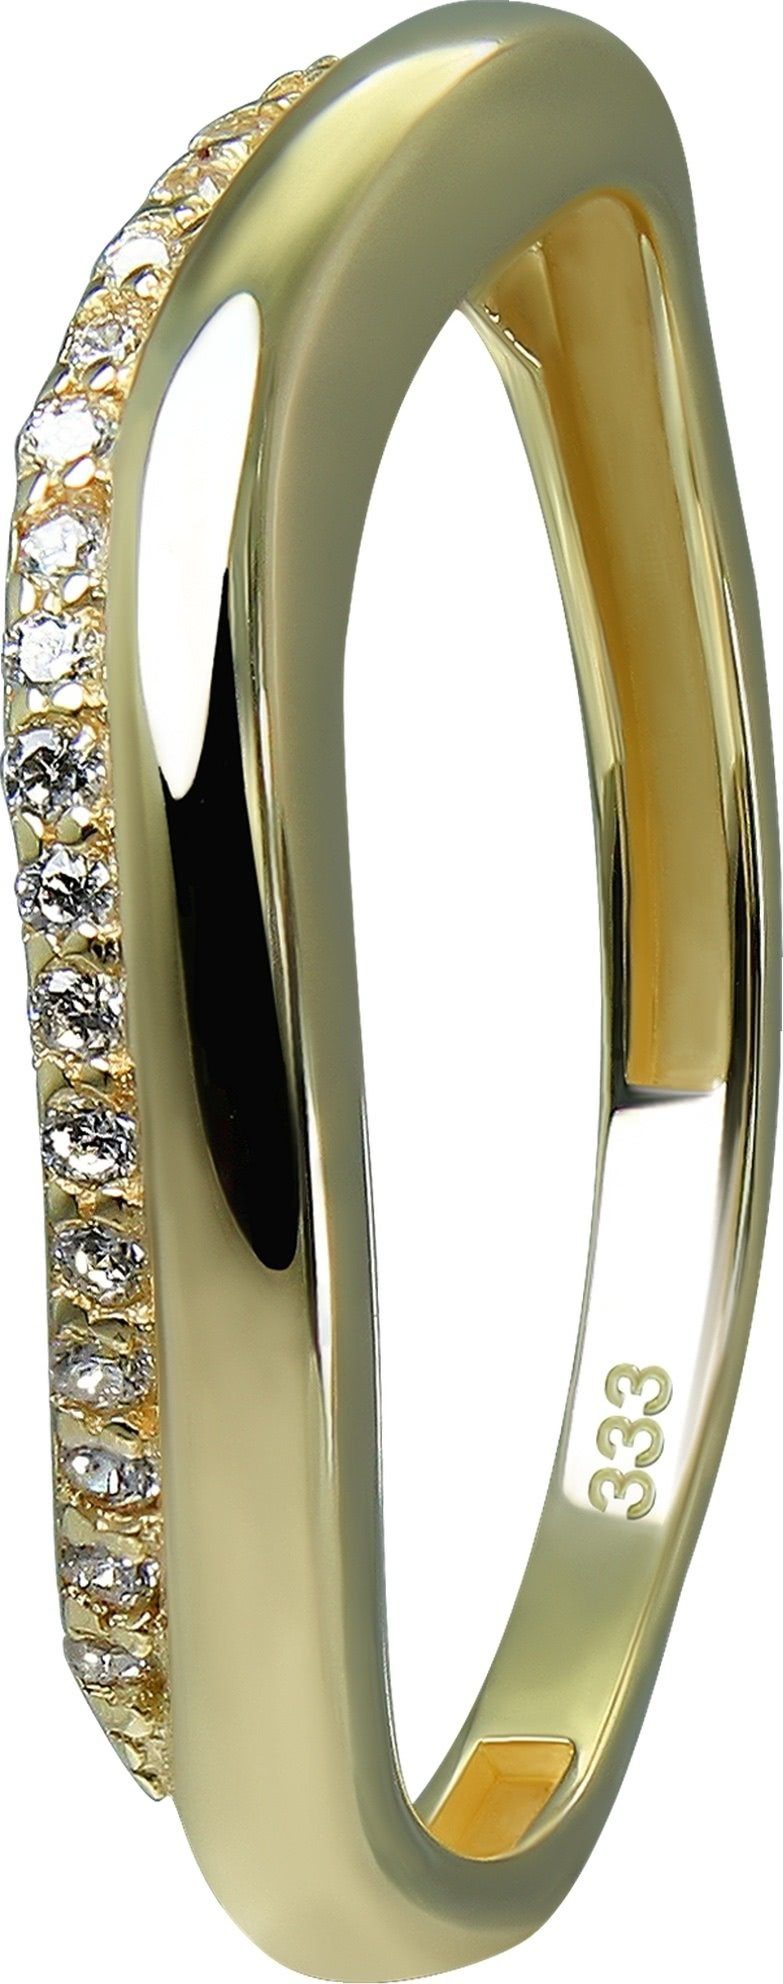 GoldDream Goldring GoldDream Gold Ring Welle Gr.60 Zirkonia (Fingerring), Damen Ring Welle 333 Gelbgold - 8 Karat, Farbe: gold, weiß